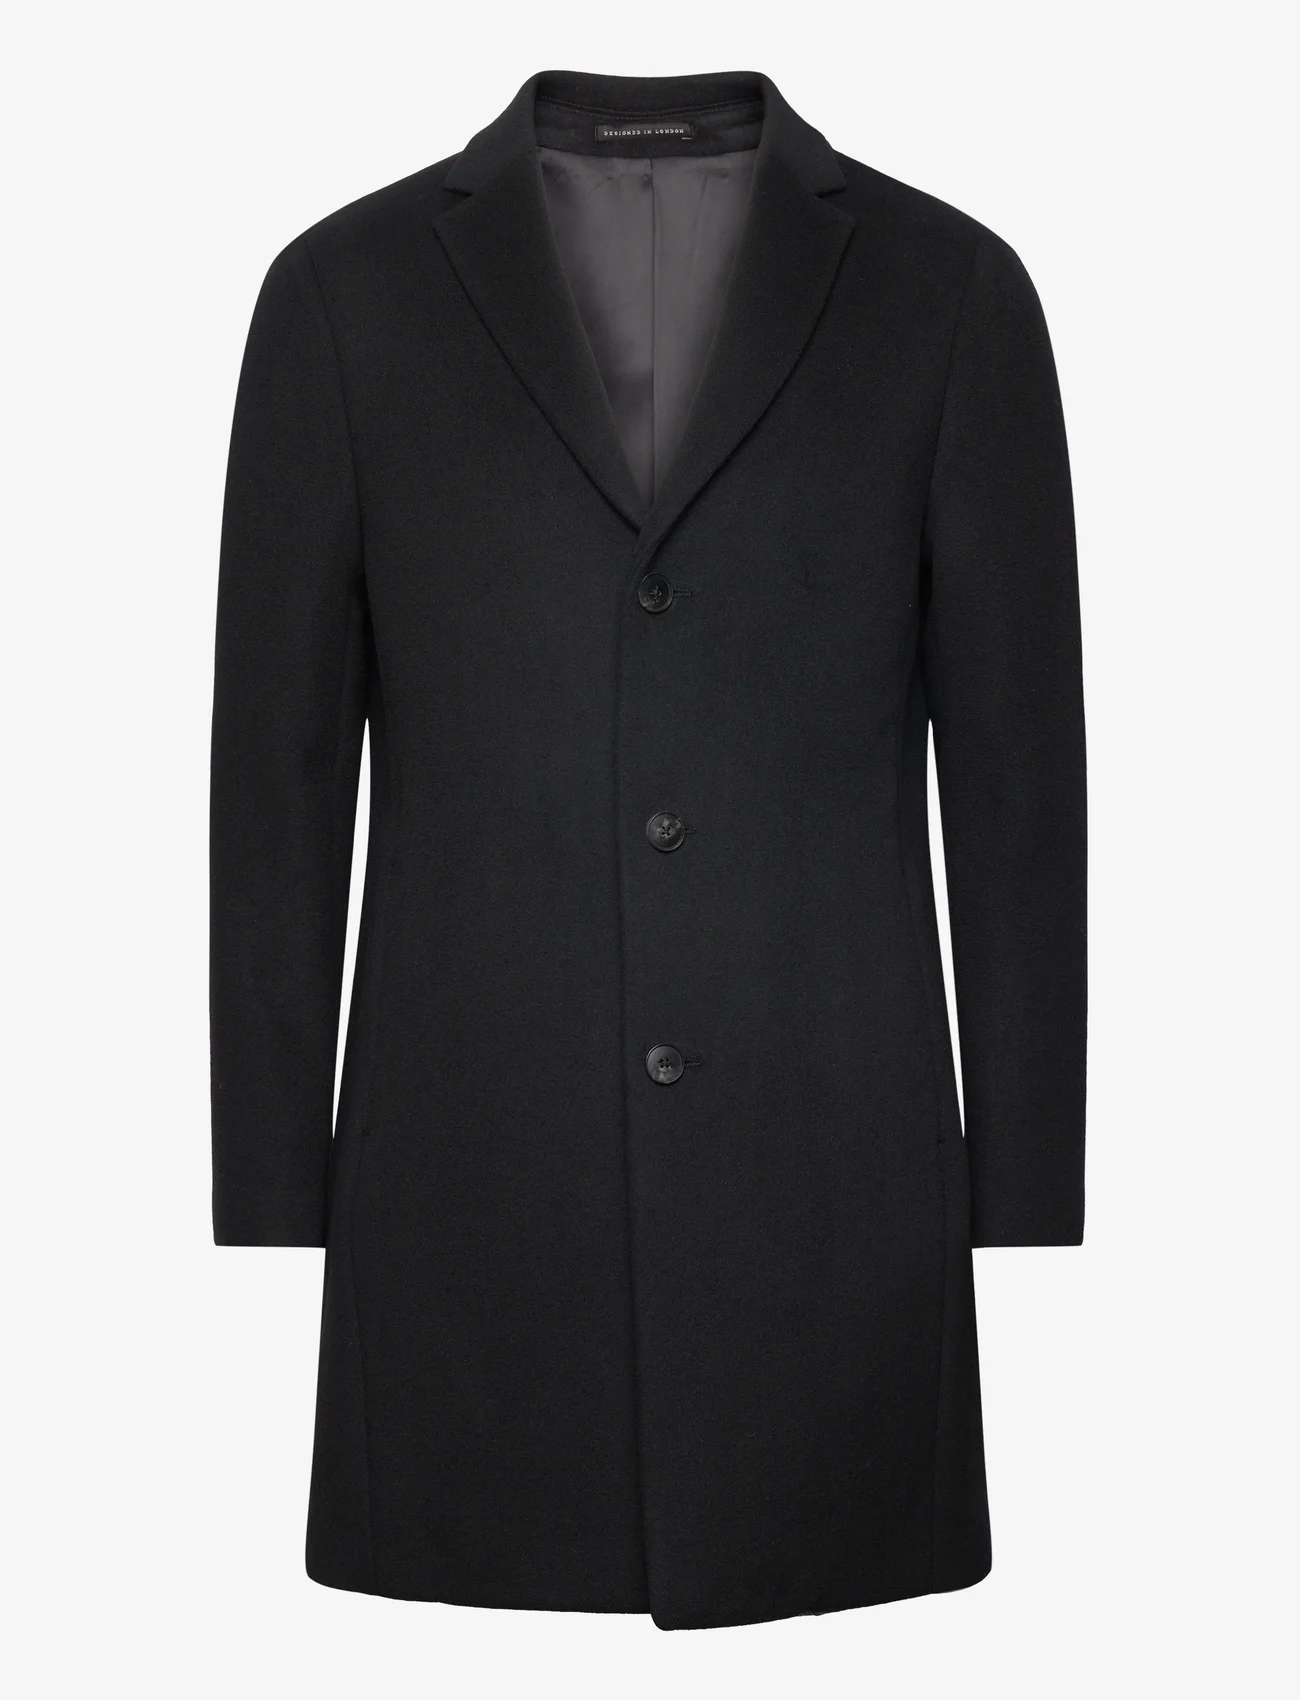 Reiss - GABLE - winter jackets - black - 0